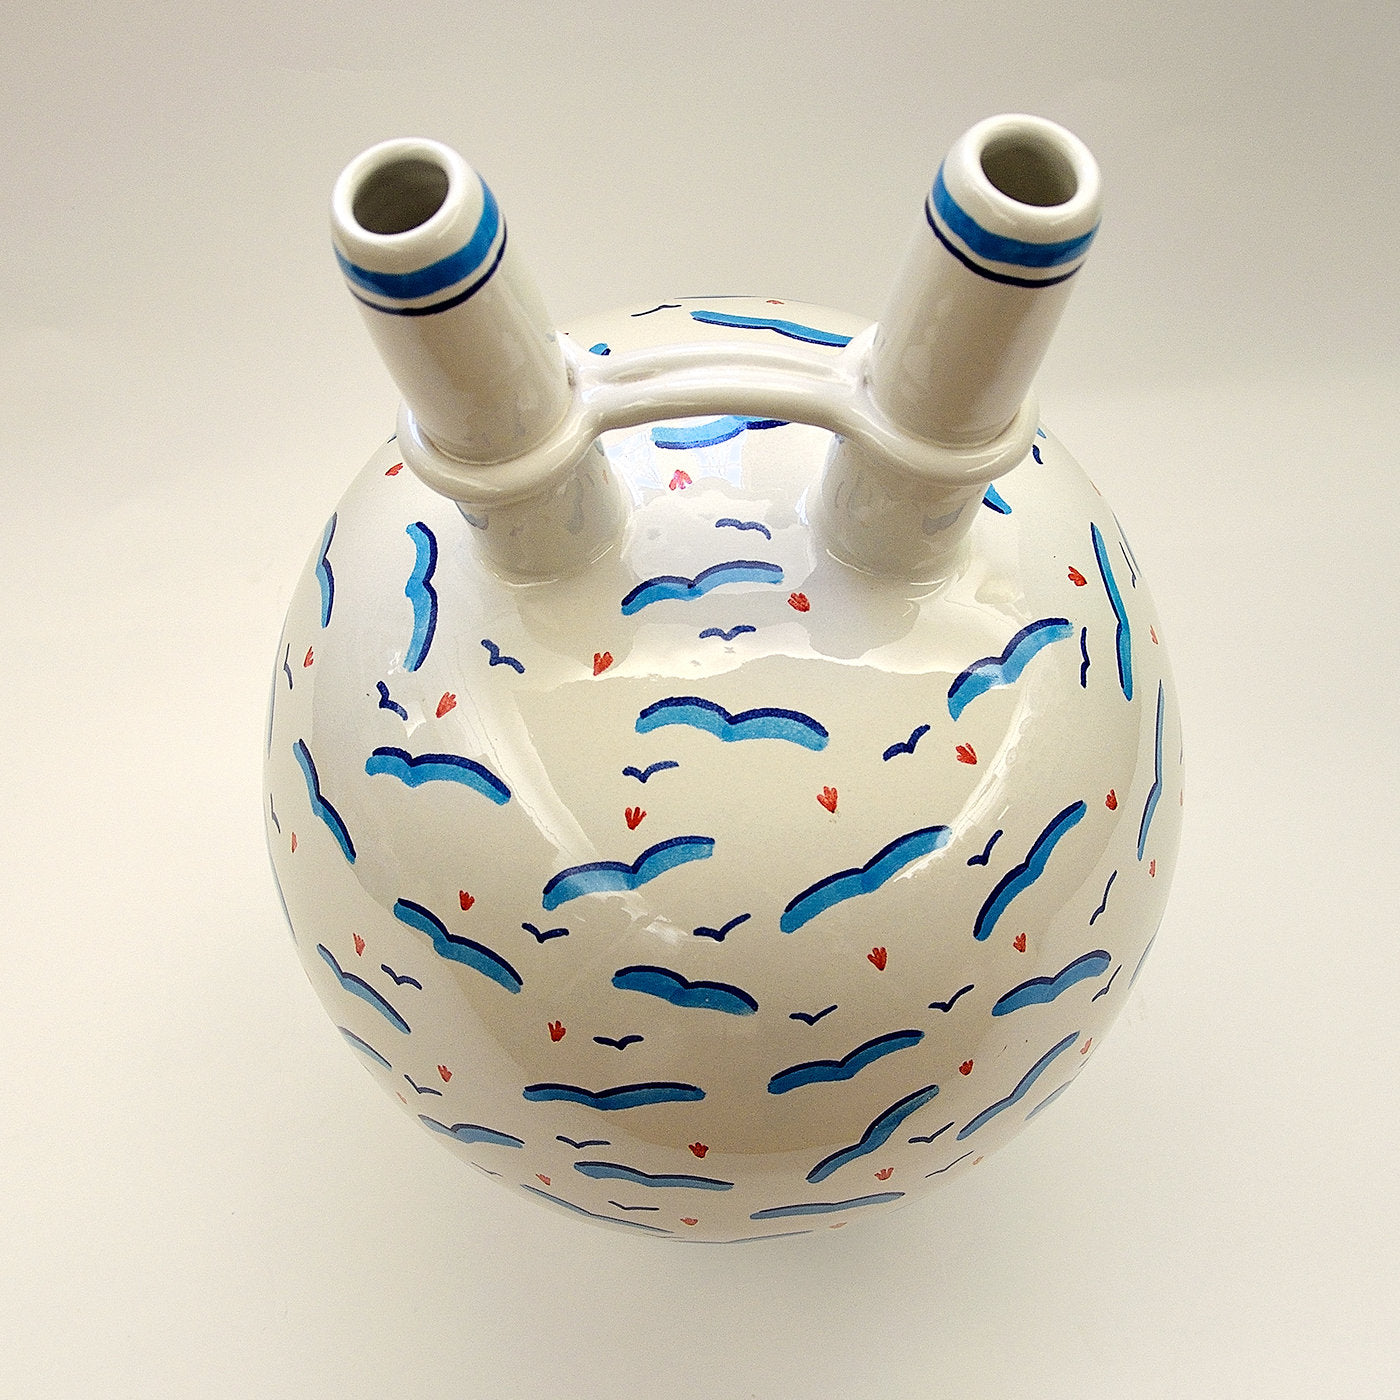 White Vase With Gulls by Ugo La Pietra - Alternative view 1